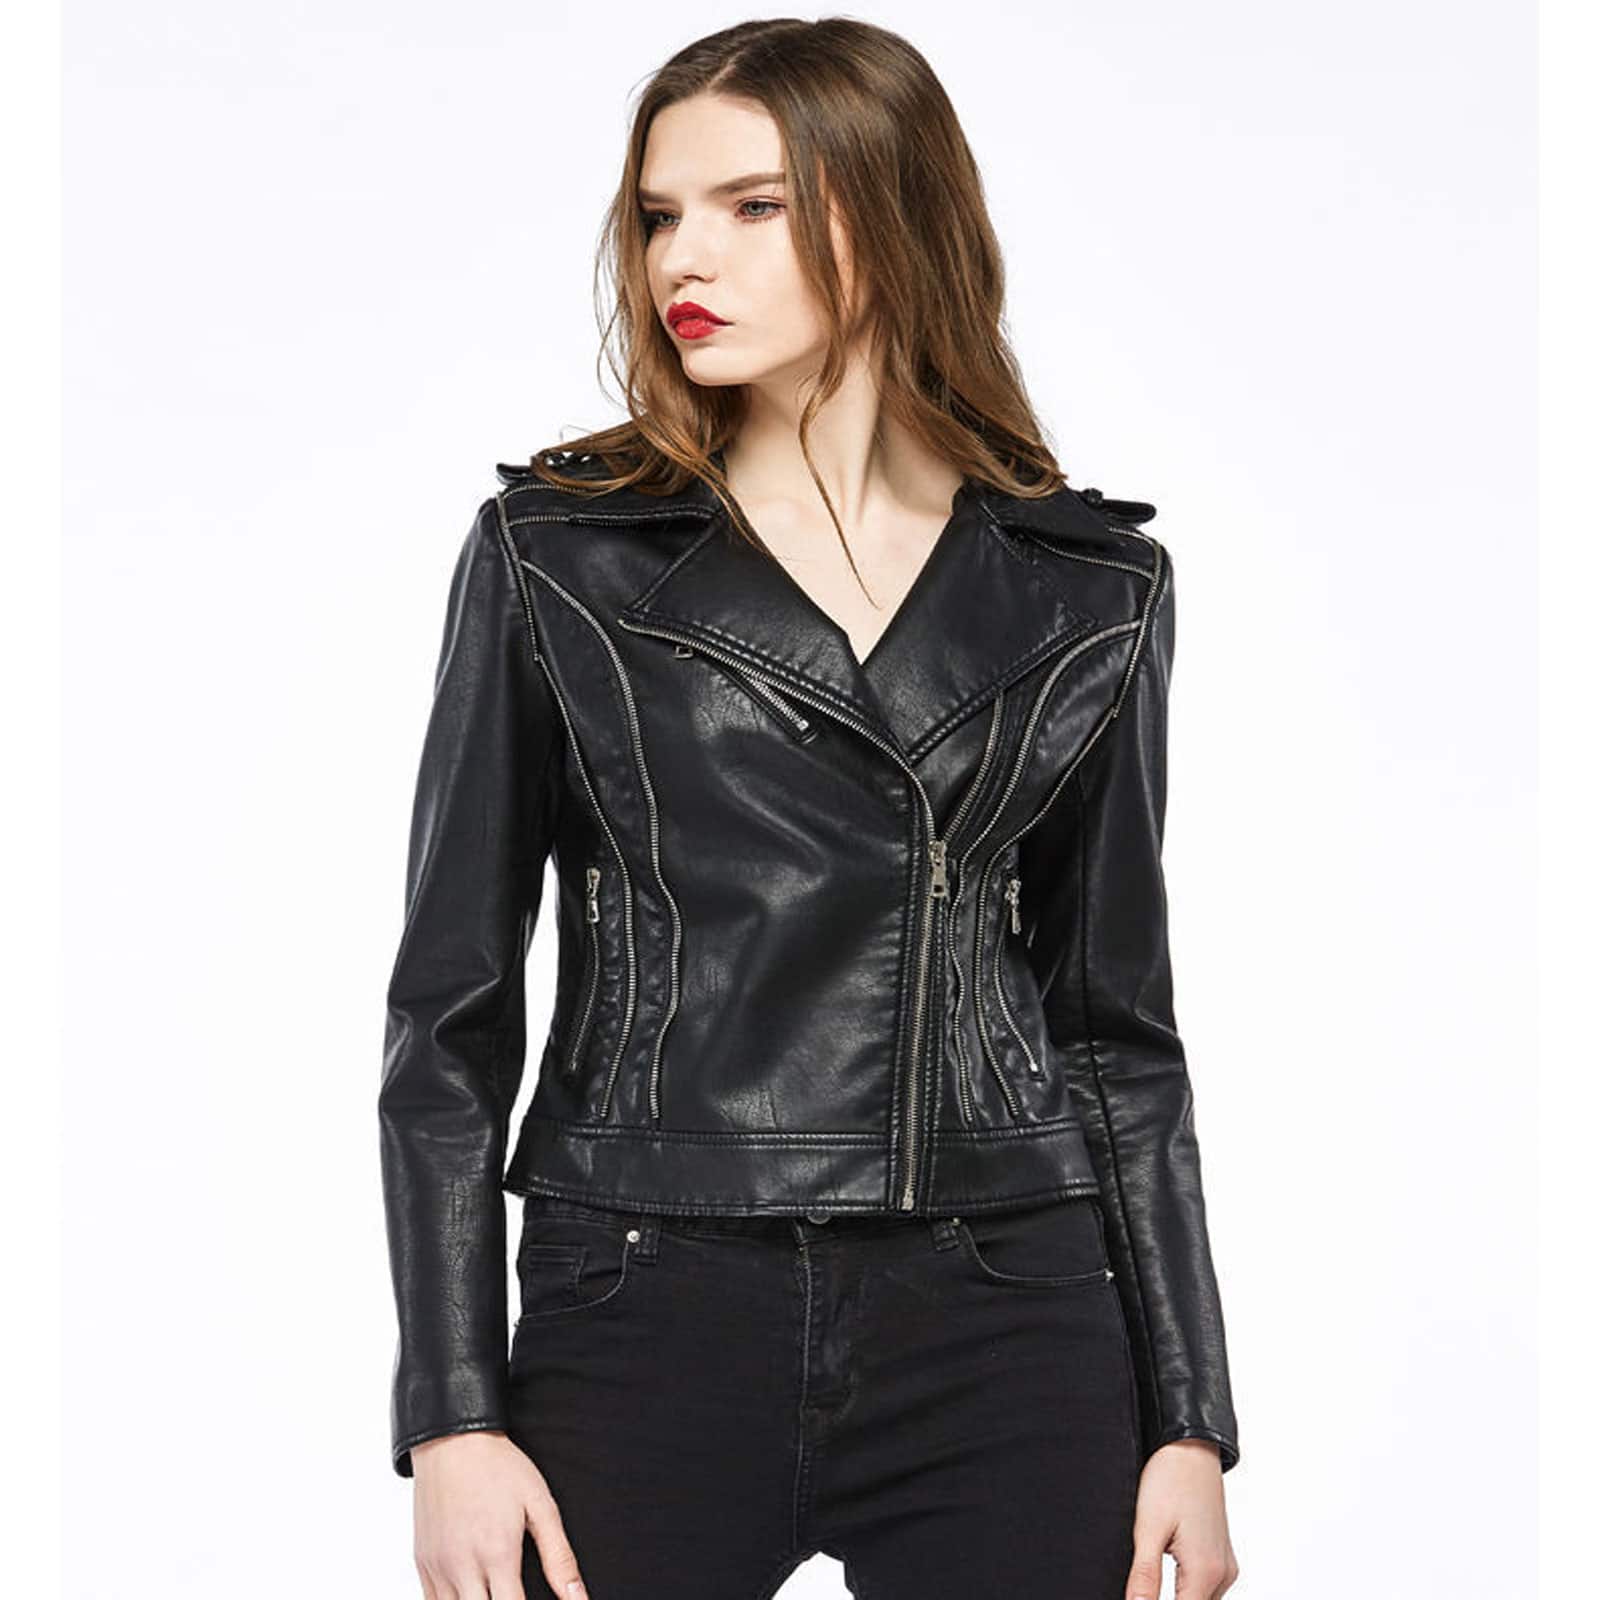 Zipper Biker Leather Jacket for Women | Custom Jacket | Kilt and Jacks